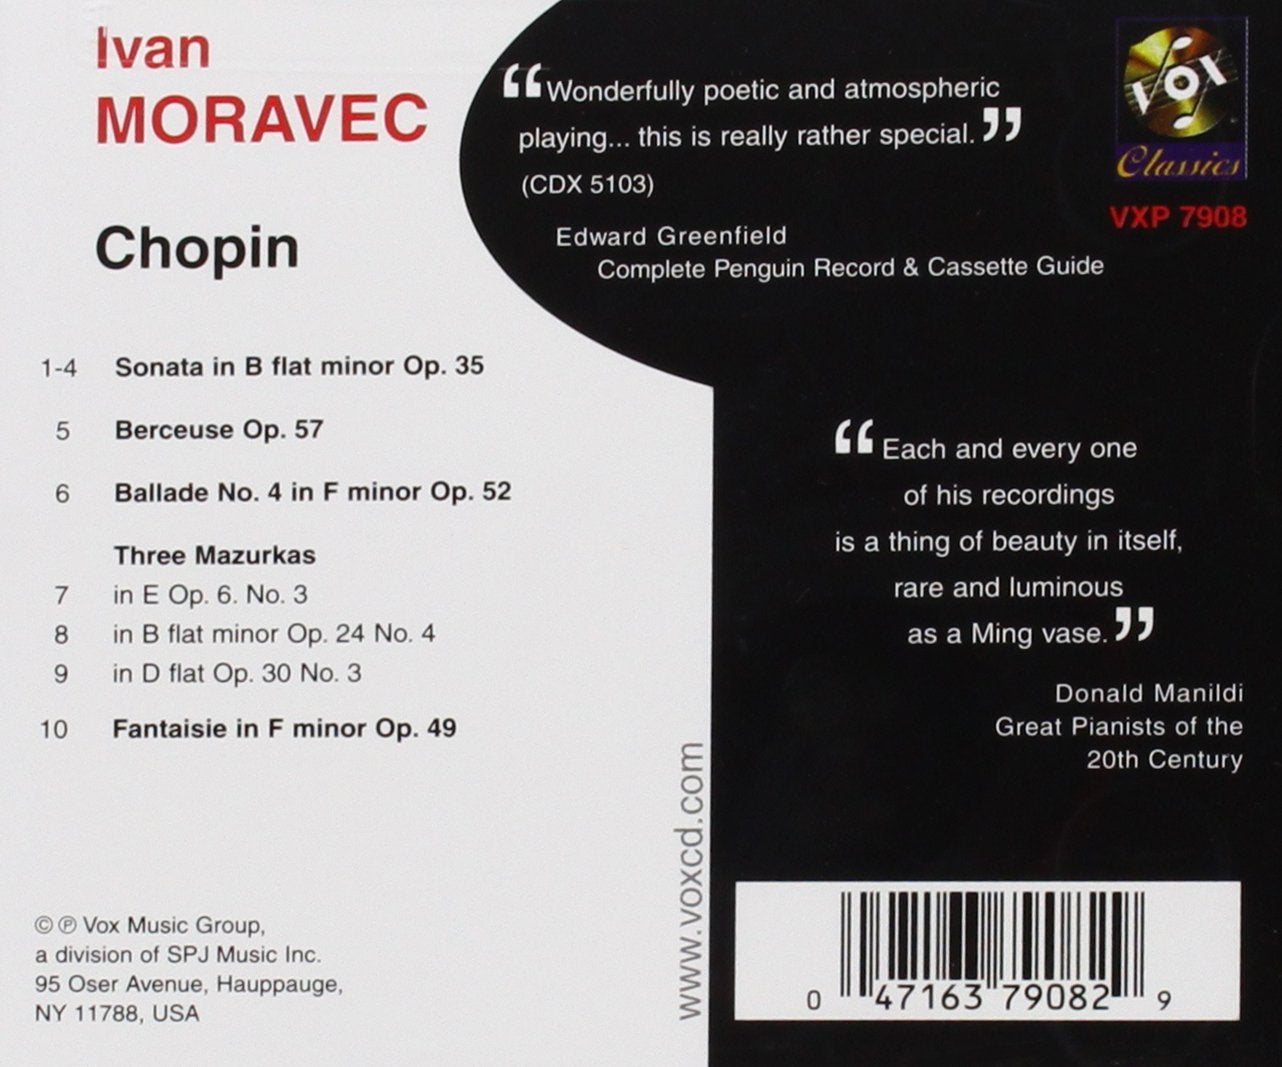 IVAN MORAVEC PLAYS CHOPIN